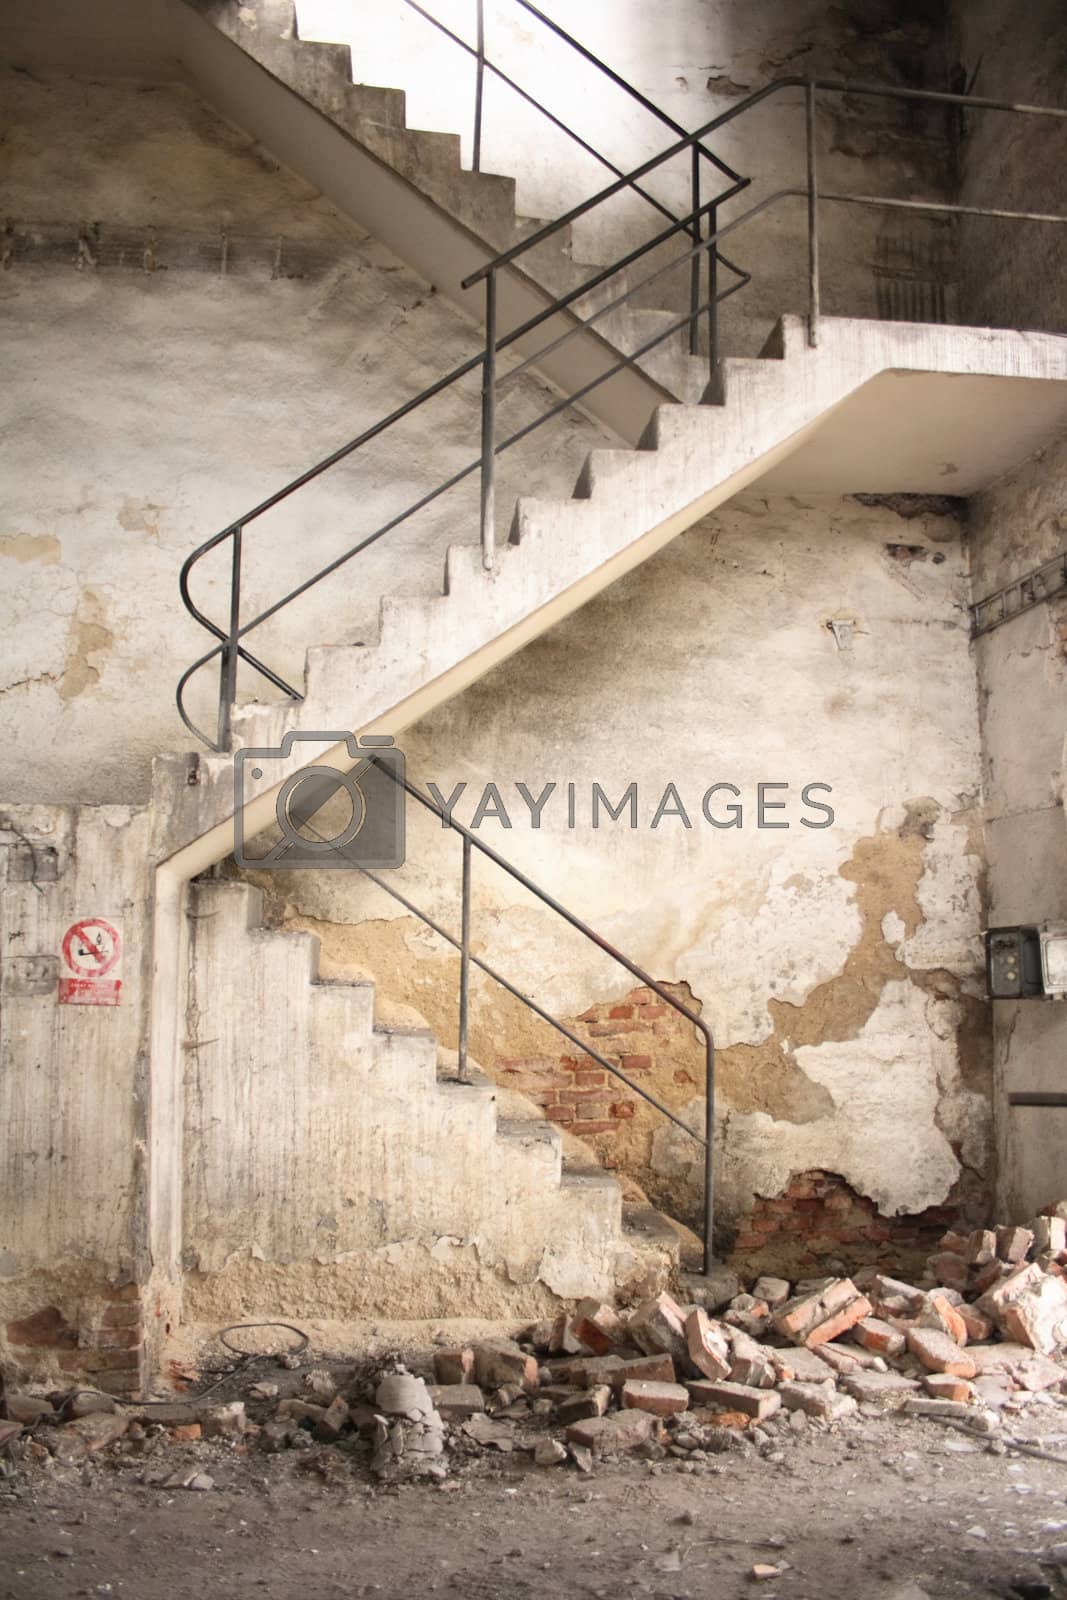 Royalty free image of stairs by jonnysek